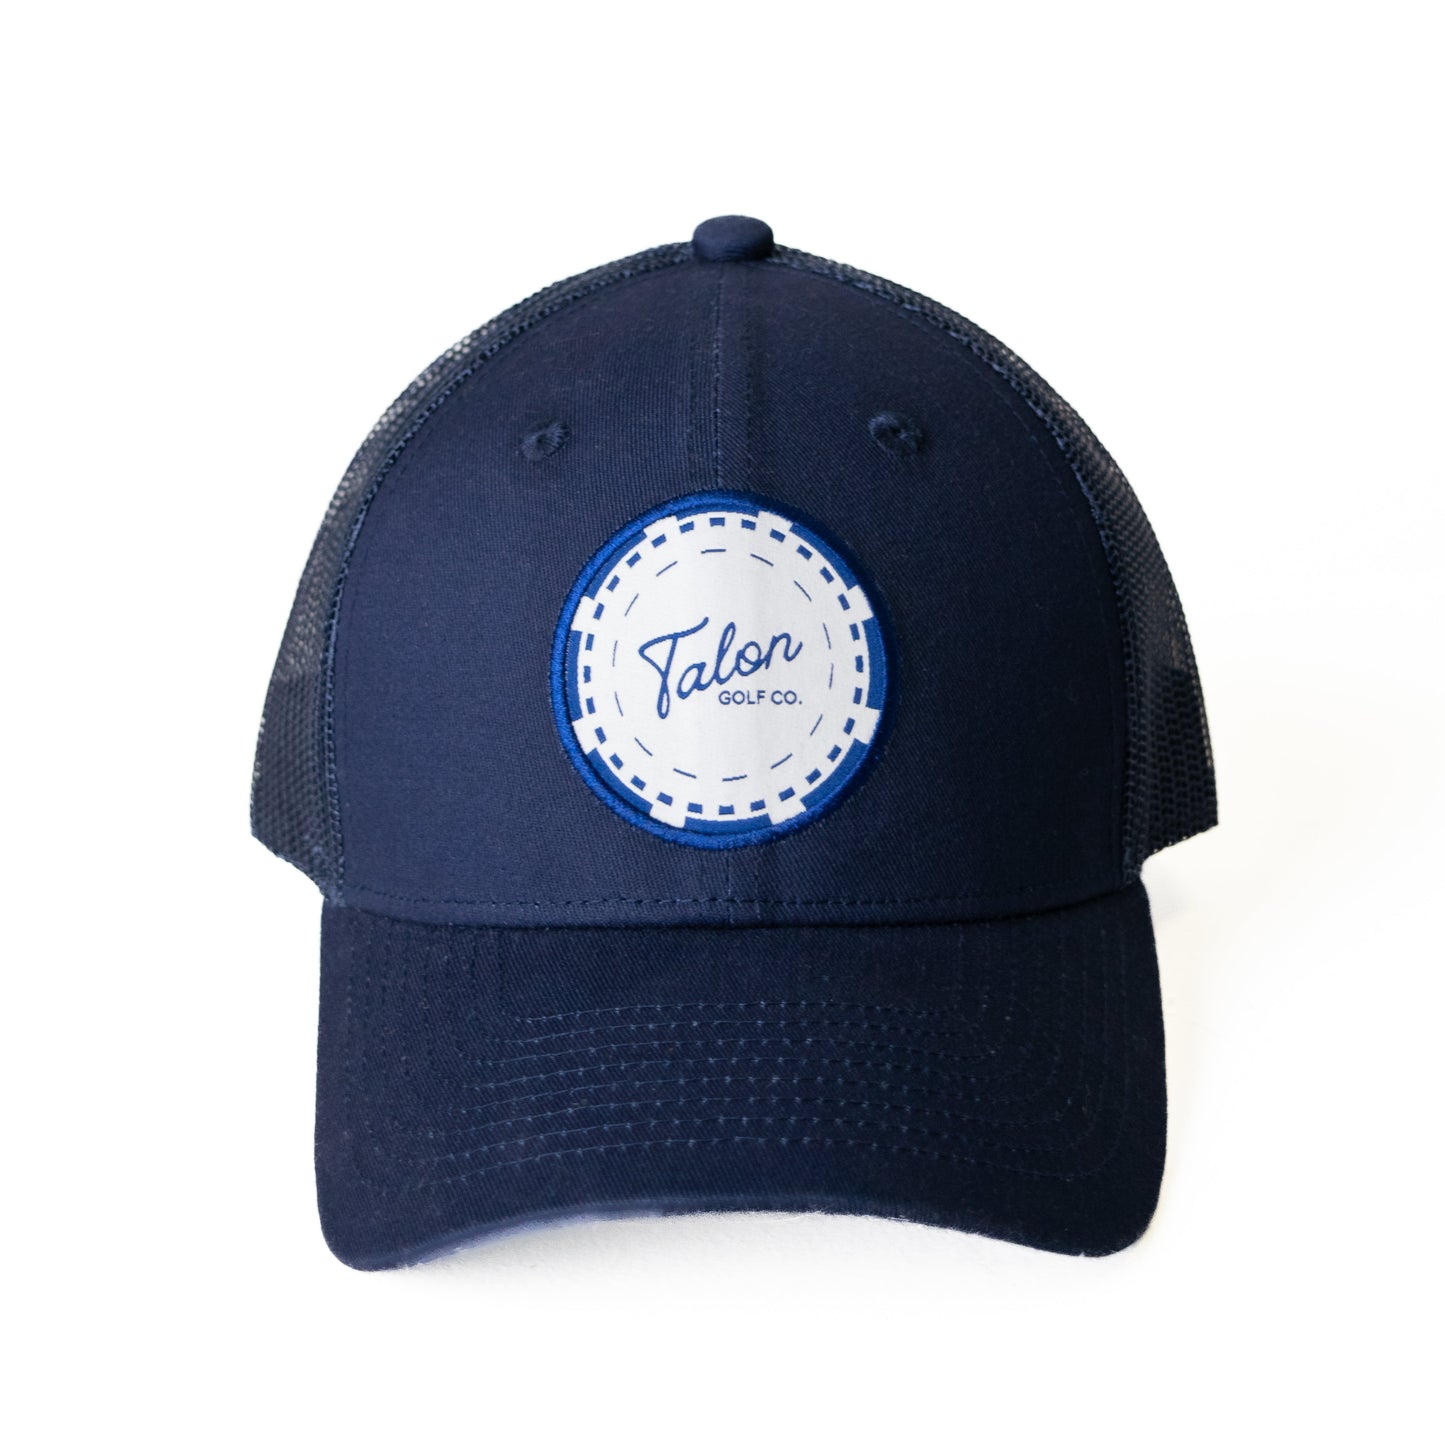 Poker Chip - Navy Blue Trucker Hat by Talon Golf LLC